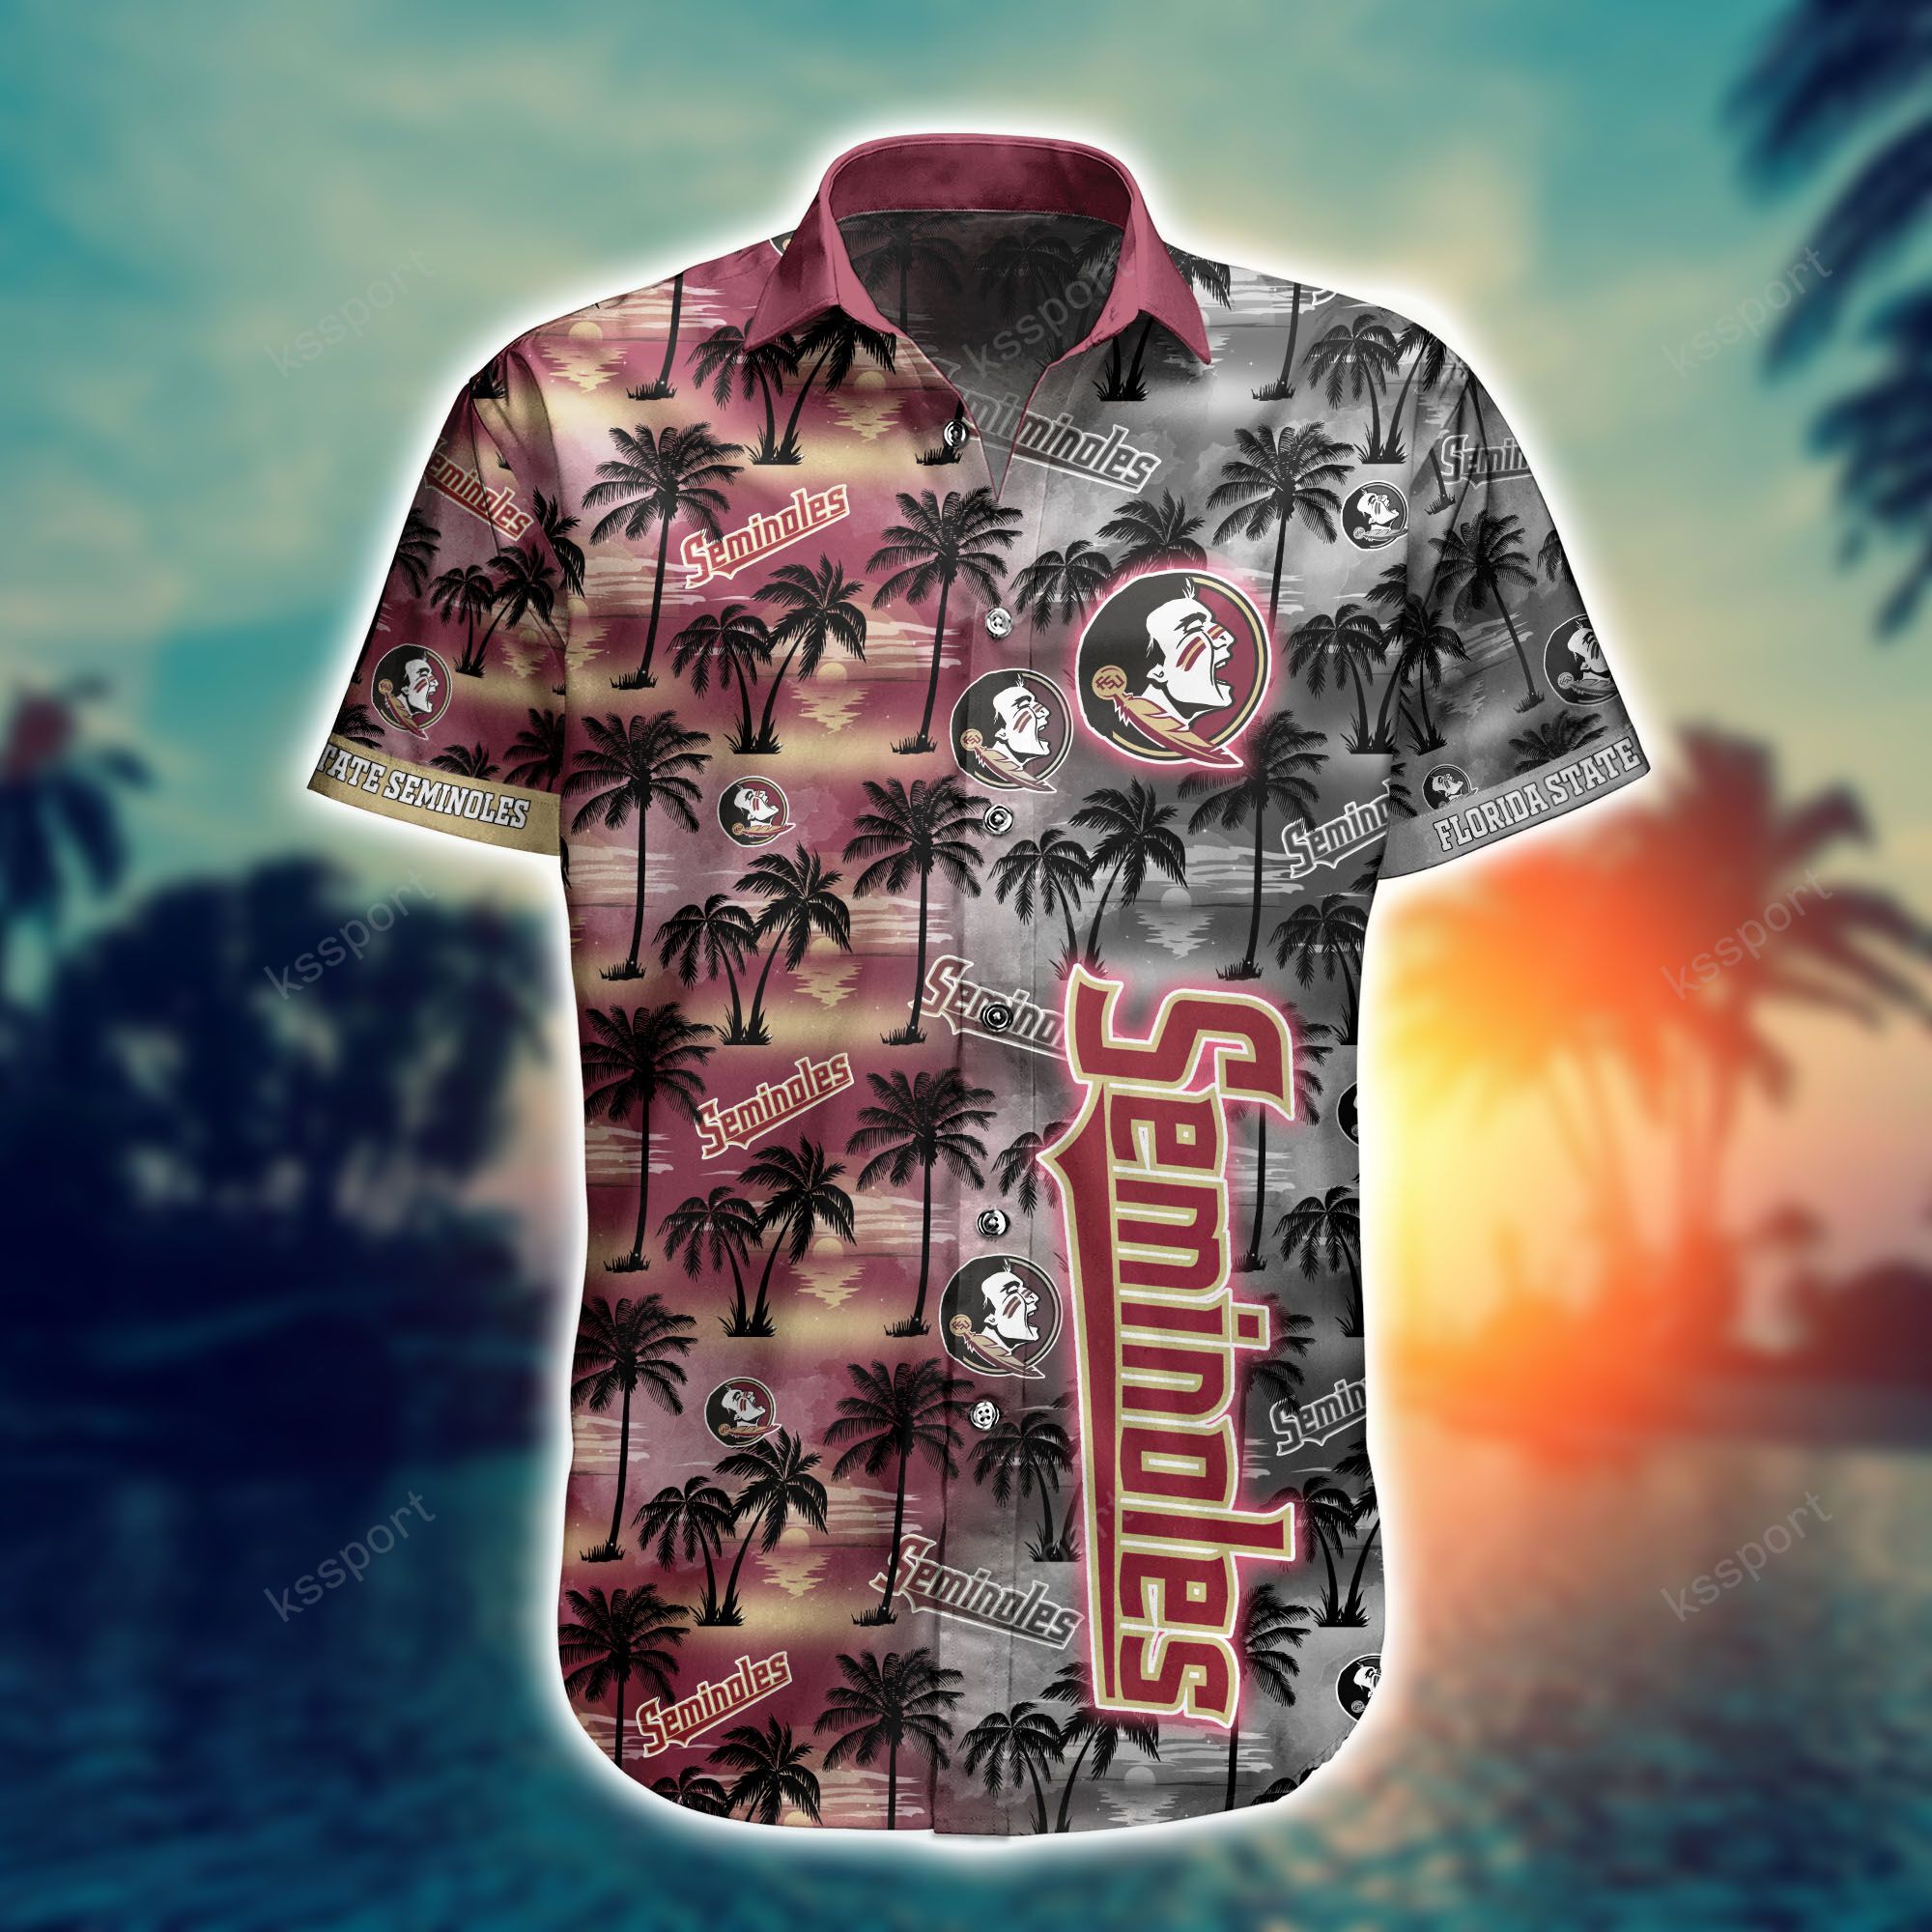 Hawaiian shirt and shorts is a great way to look stylish at a beach party 63